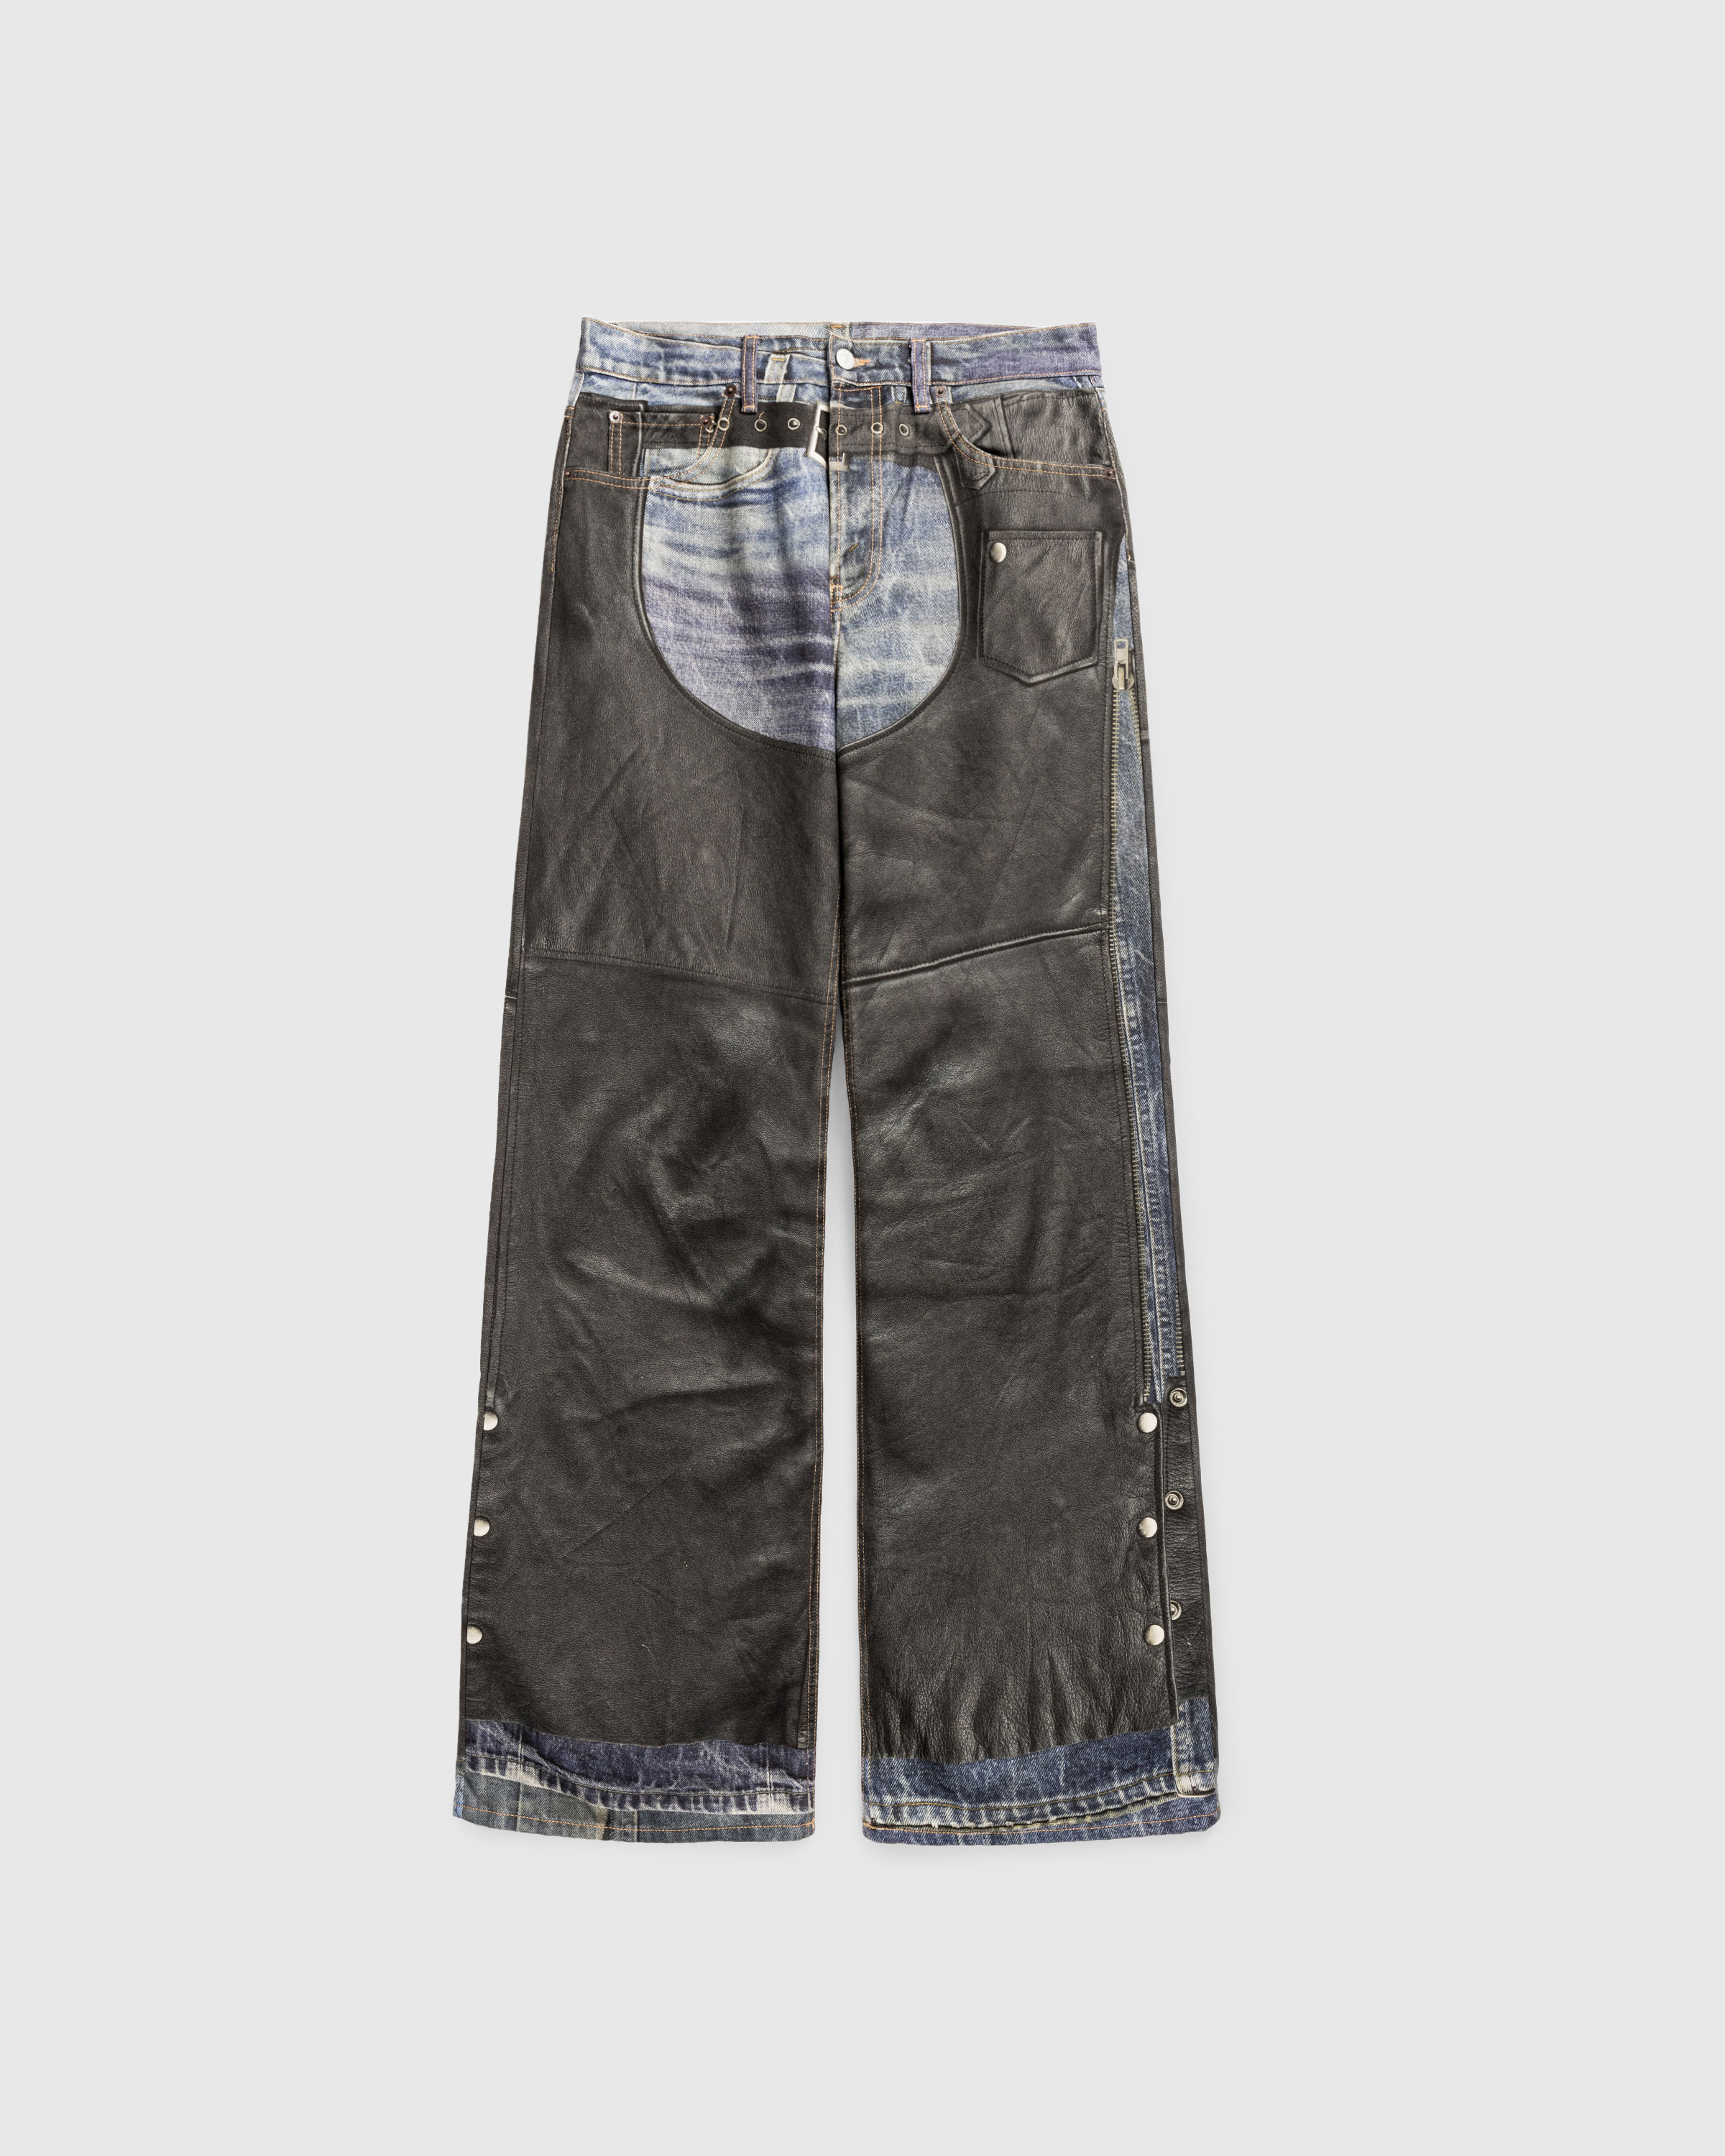 Acne Studios – Printed Trousers Blue/Black - Pants - Blue - Image 1